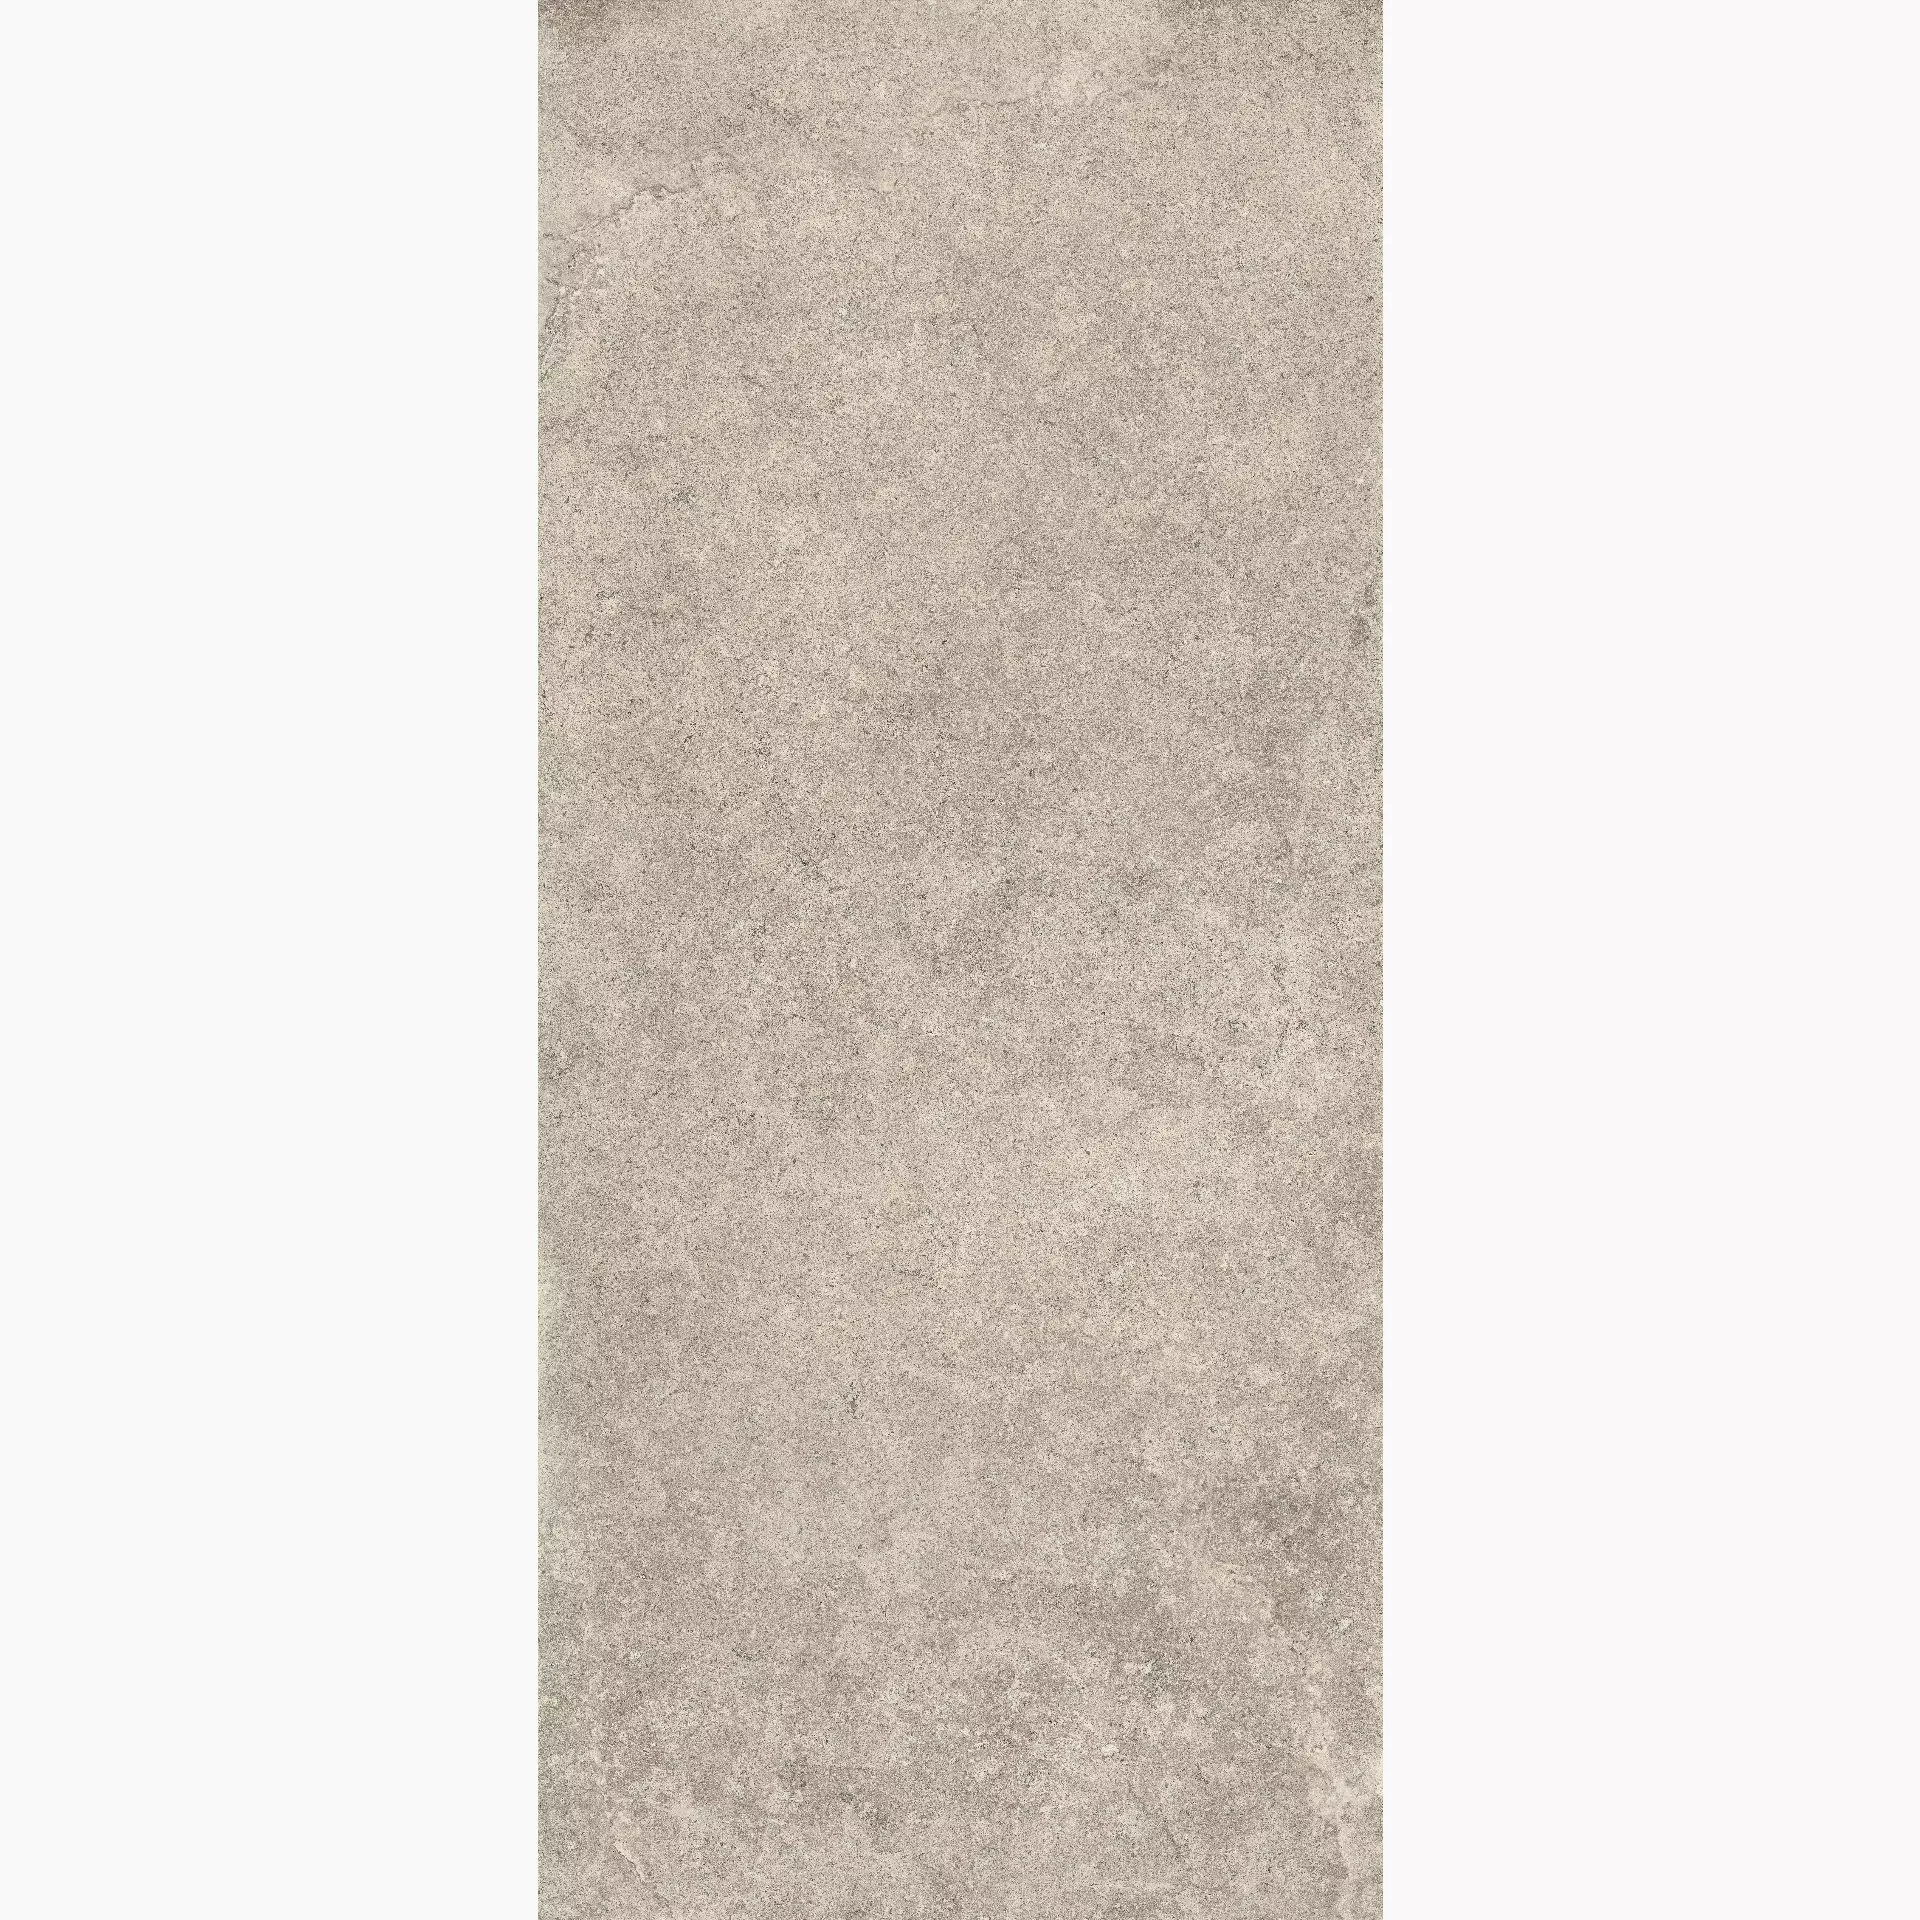 Cottodeste Kerlite Pura Sand Chiseled Sand EK6PU80 gemeisselt 120x278cm rektifiziert 6,5mm